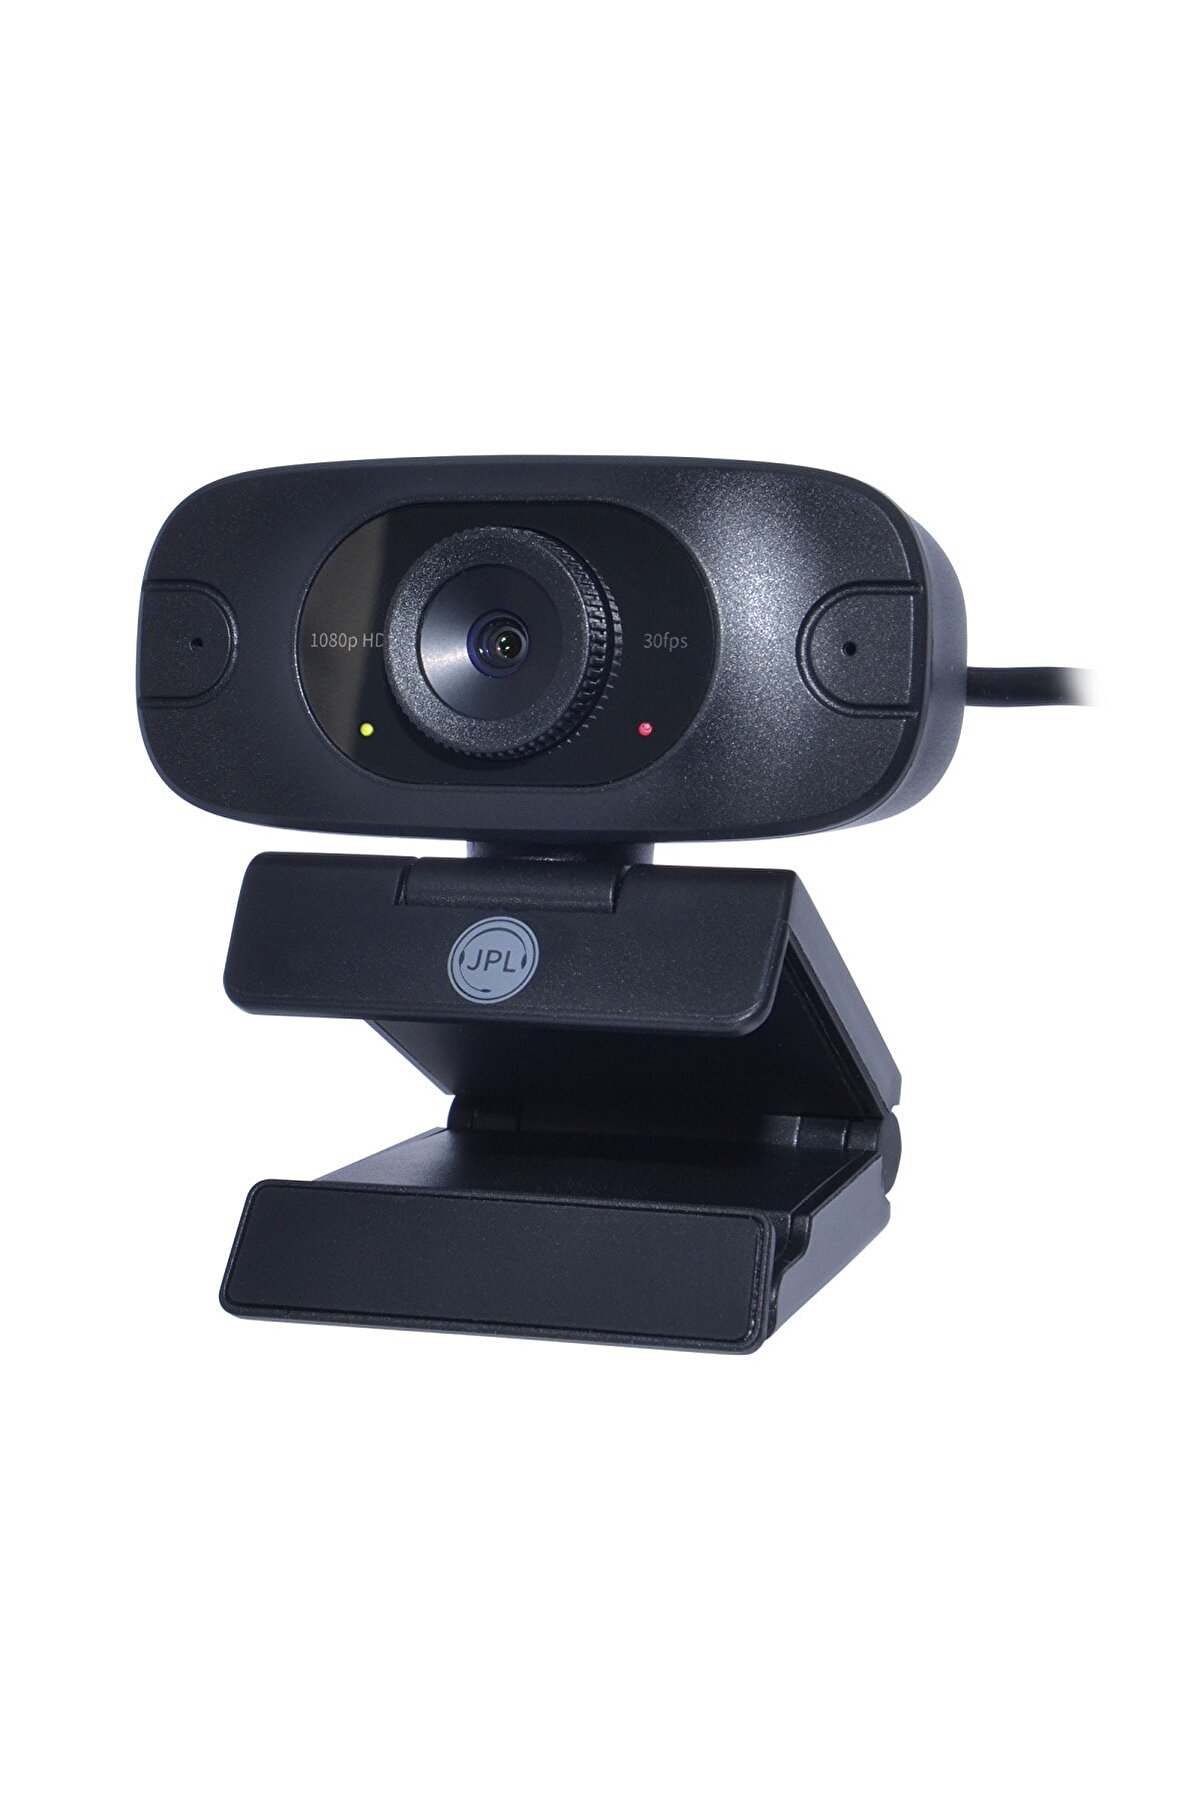 JPL 1080p Hd 30fps Cmos Lens Usb Vision Mini Webcam